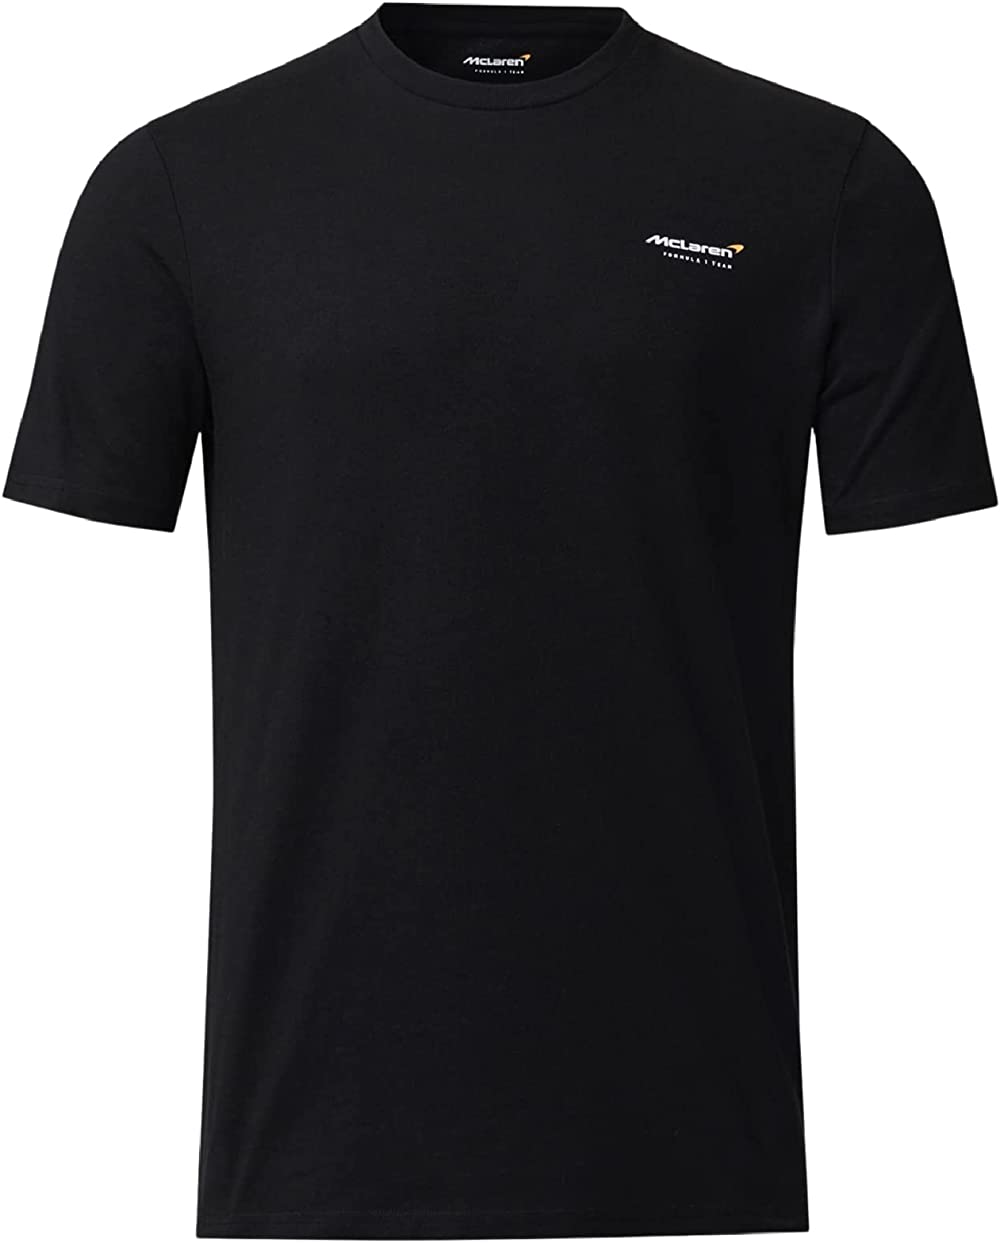 McLaren F1™ Lando Norris T-Shirt - Men - Black